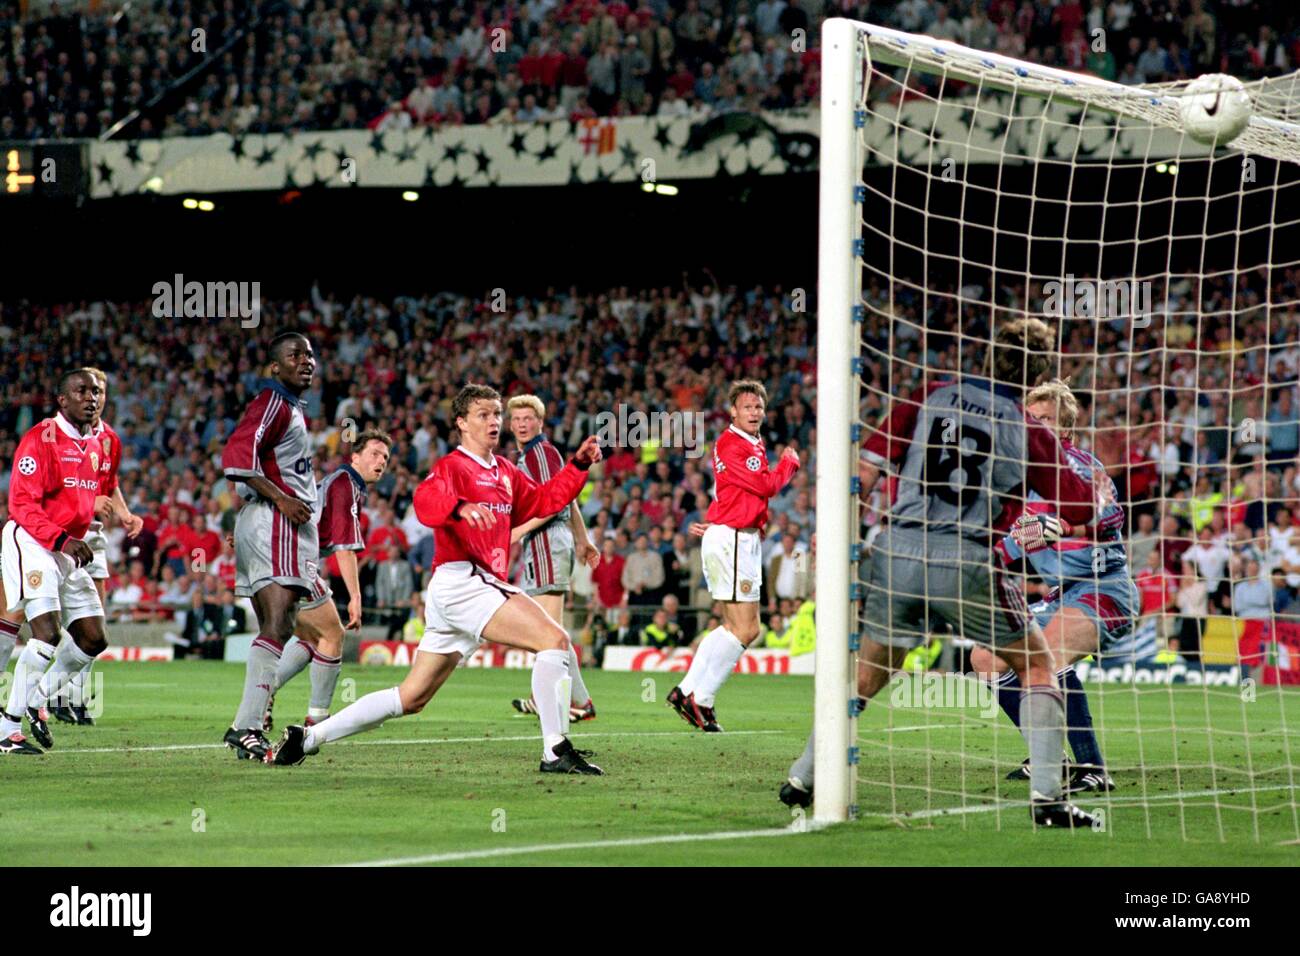 Manchester United 's Ole Gunnar Solskjaer scores the winning goal ...  Soccer - UEFA Champions League - Final - Manchester United v Bayern Munich  ... 26-05-1999 ... ... None ... Photo Credit